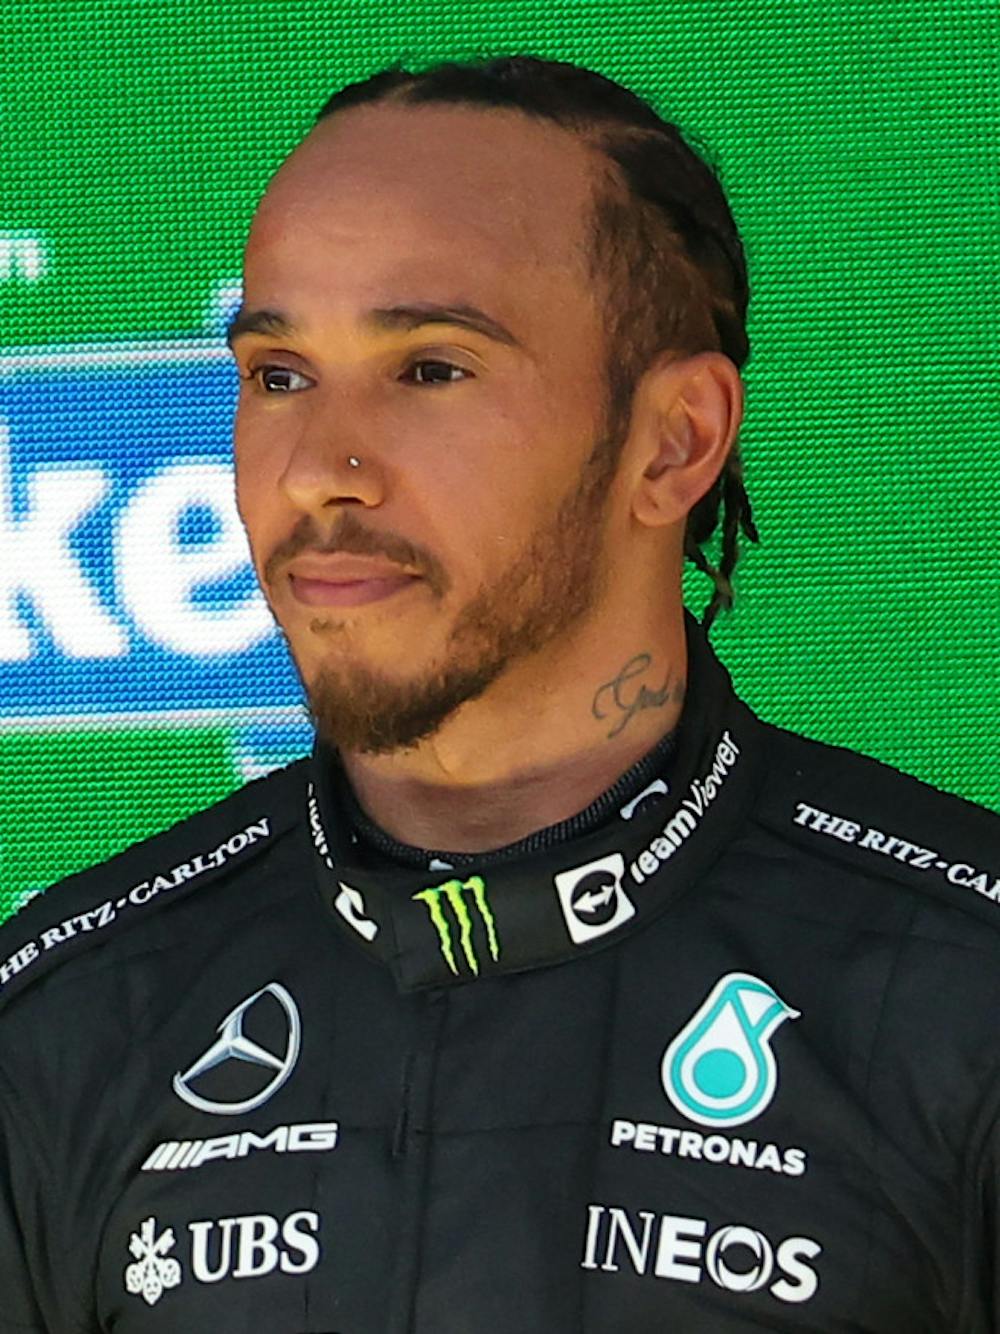 GOVERNO DO ESTADO DE SÃO PAULO / CC BY 2.0
Seven-time world champion Lewis Hamilton is set to leave Mercedes at the end of this season.&nbsp;